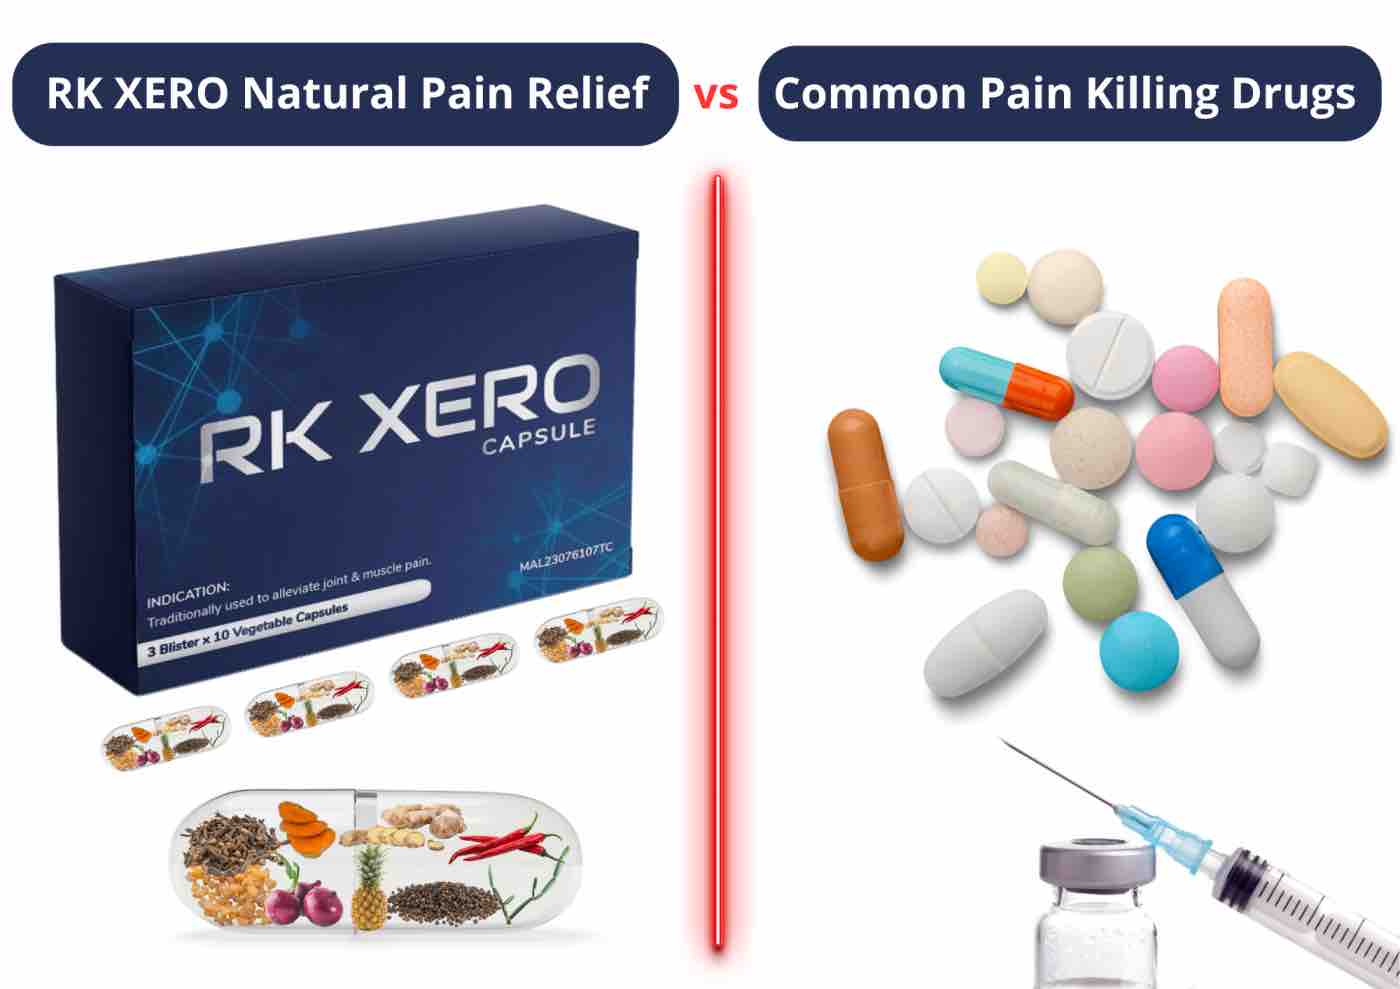 RK XERO vs Common Pain Killing Drugs